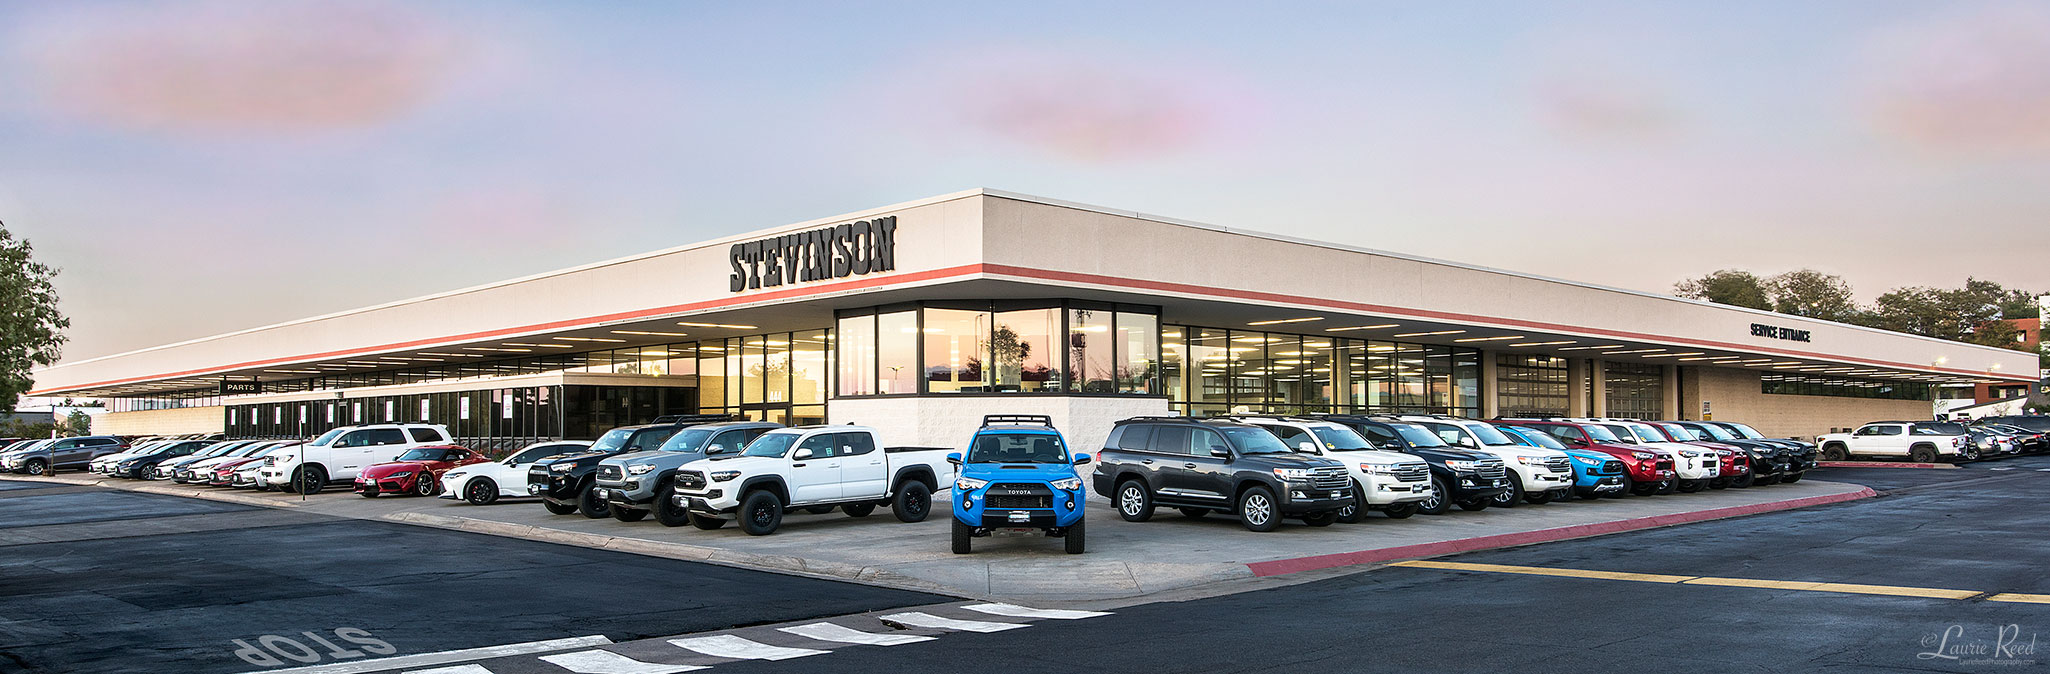 Stevinson Chevrolet Dealership